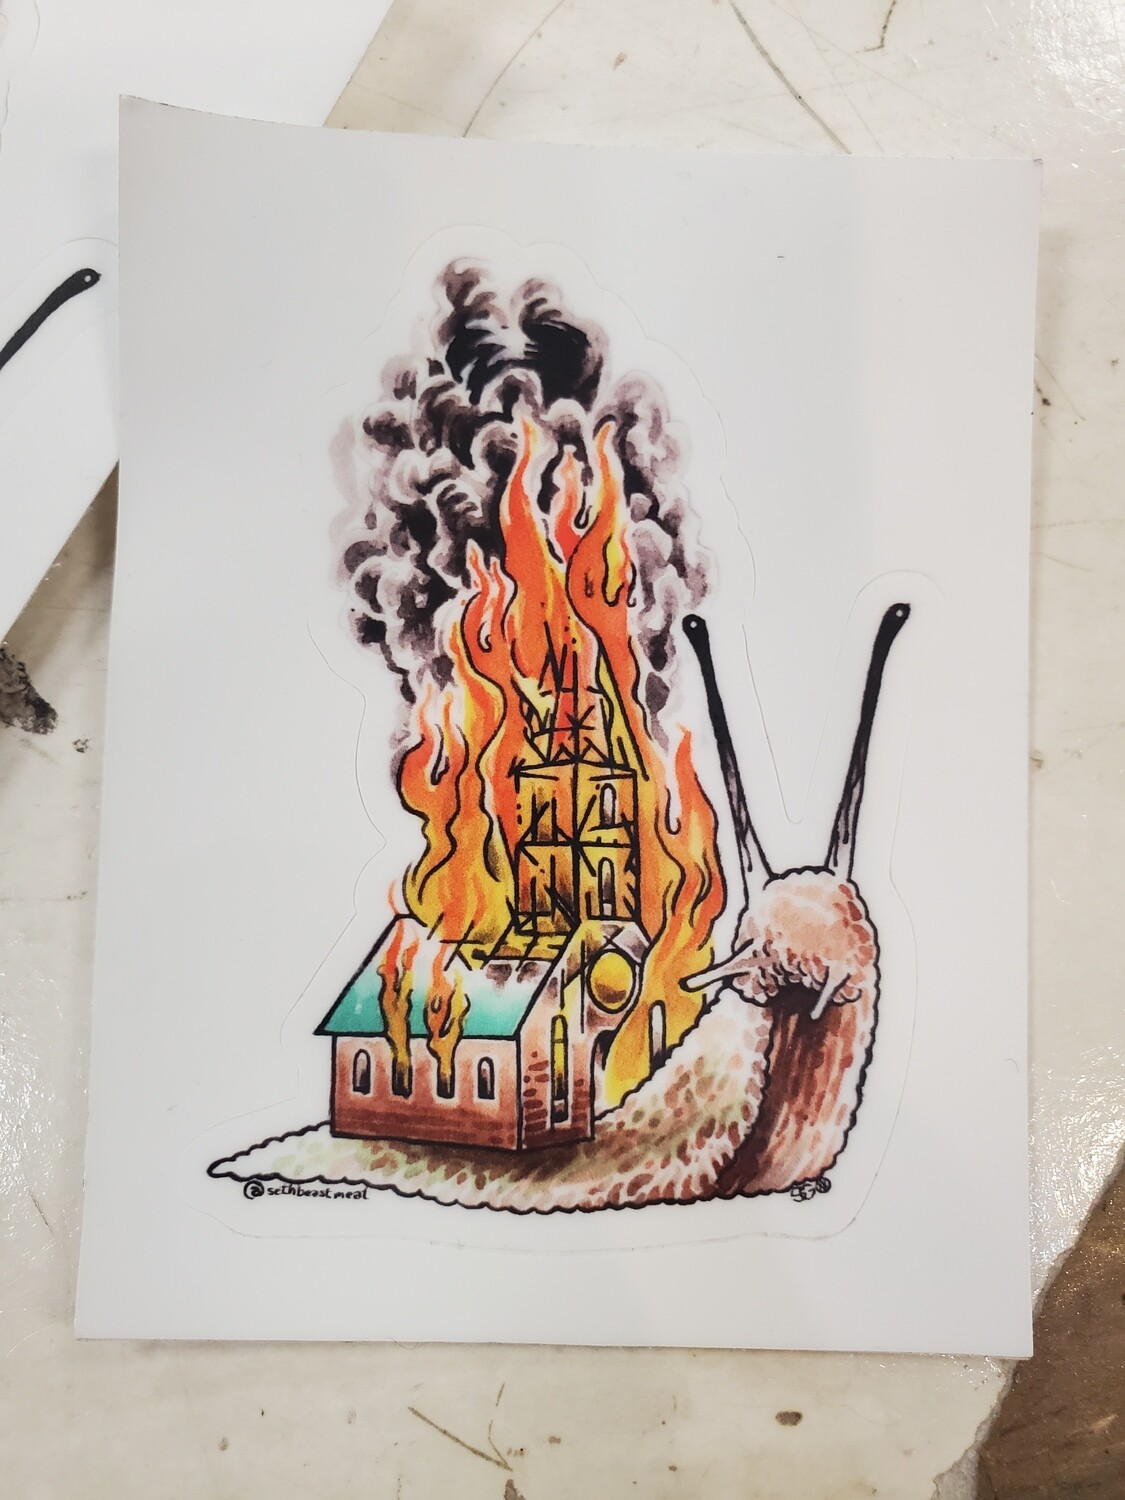 Snail Church on Fire - Sticker by Seth Goodkind